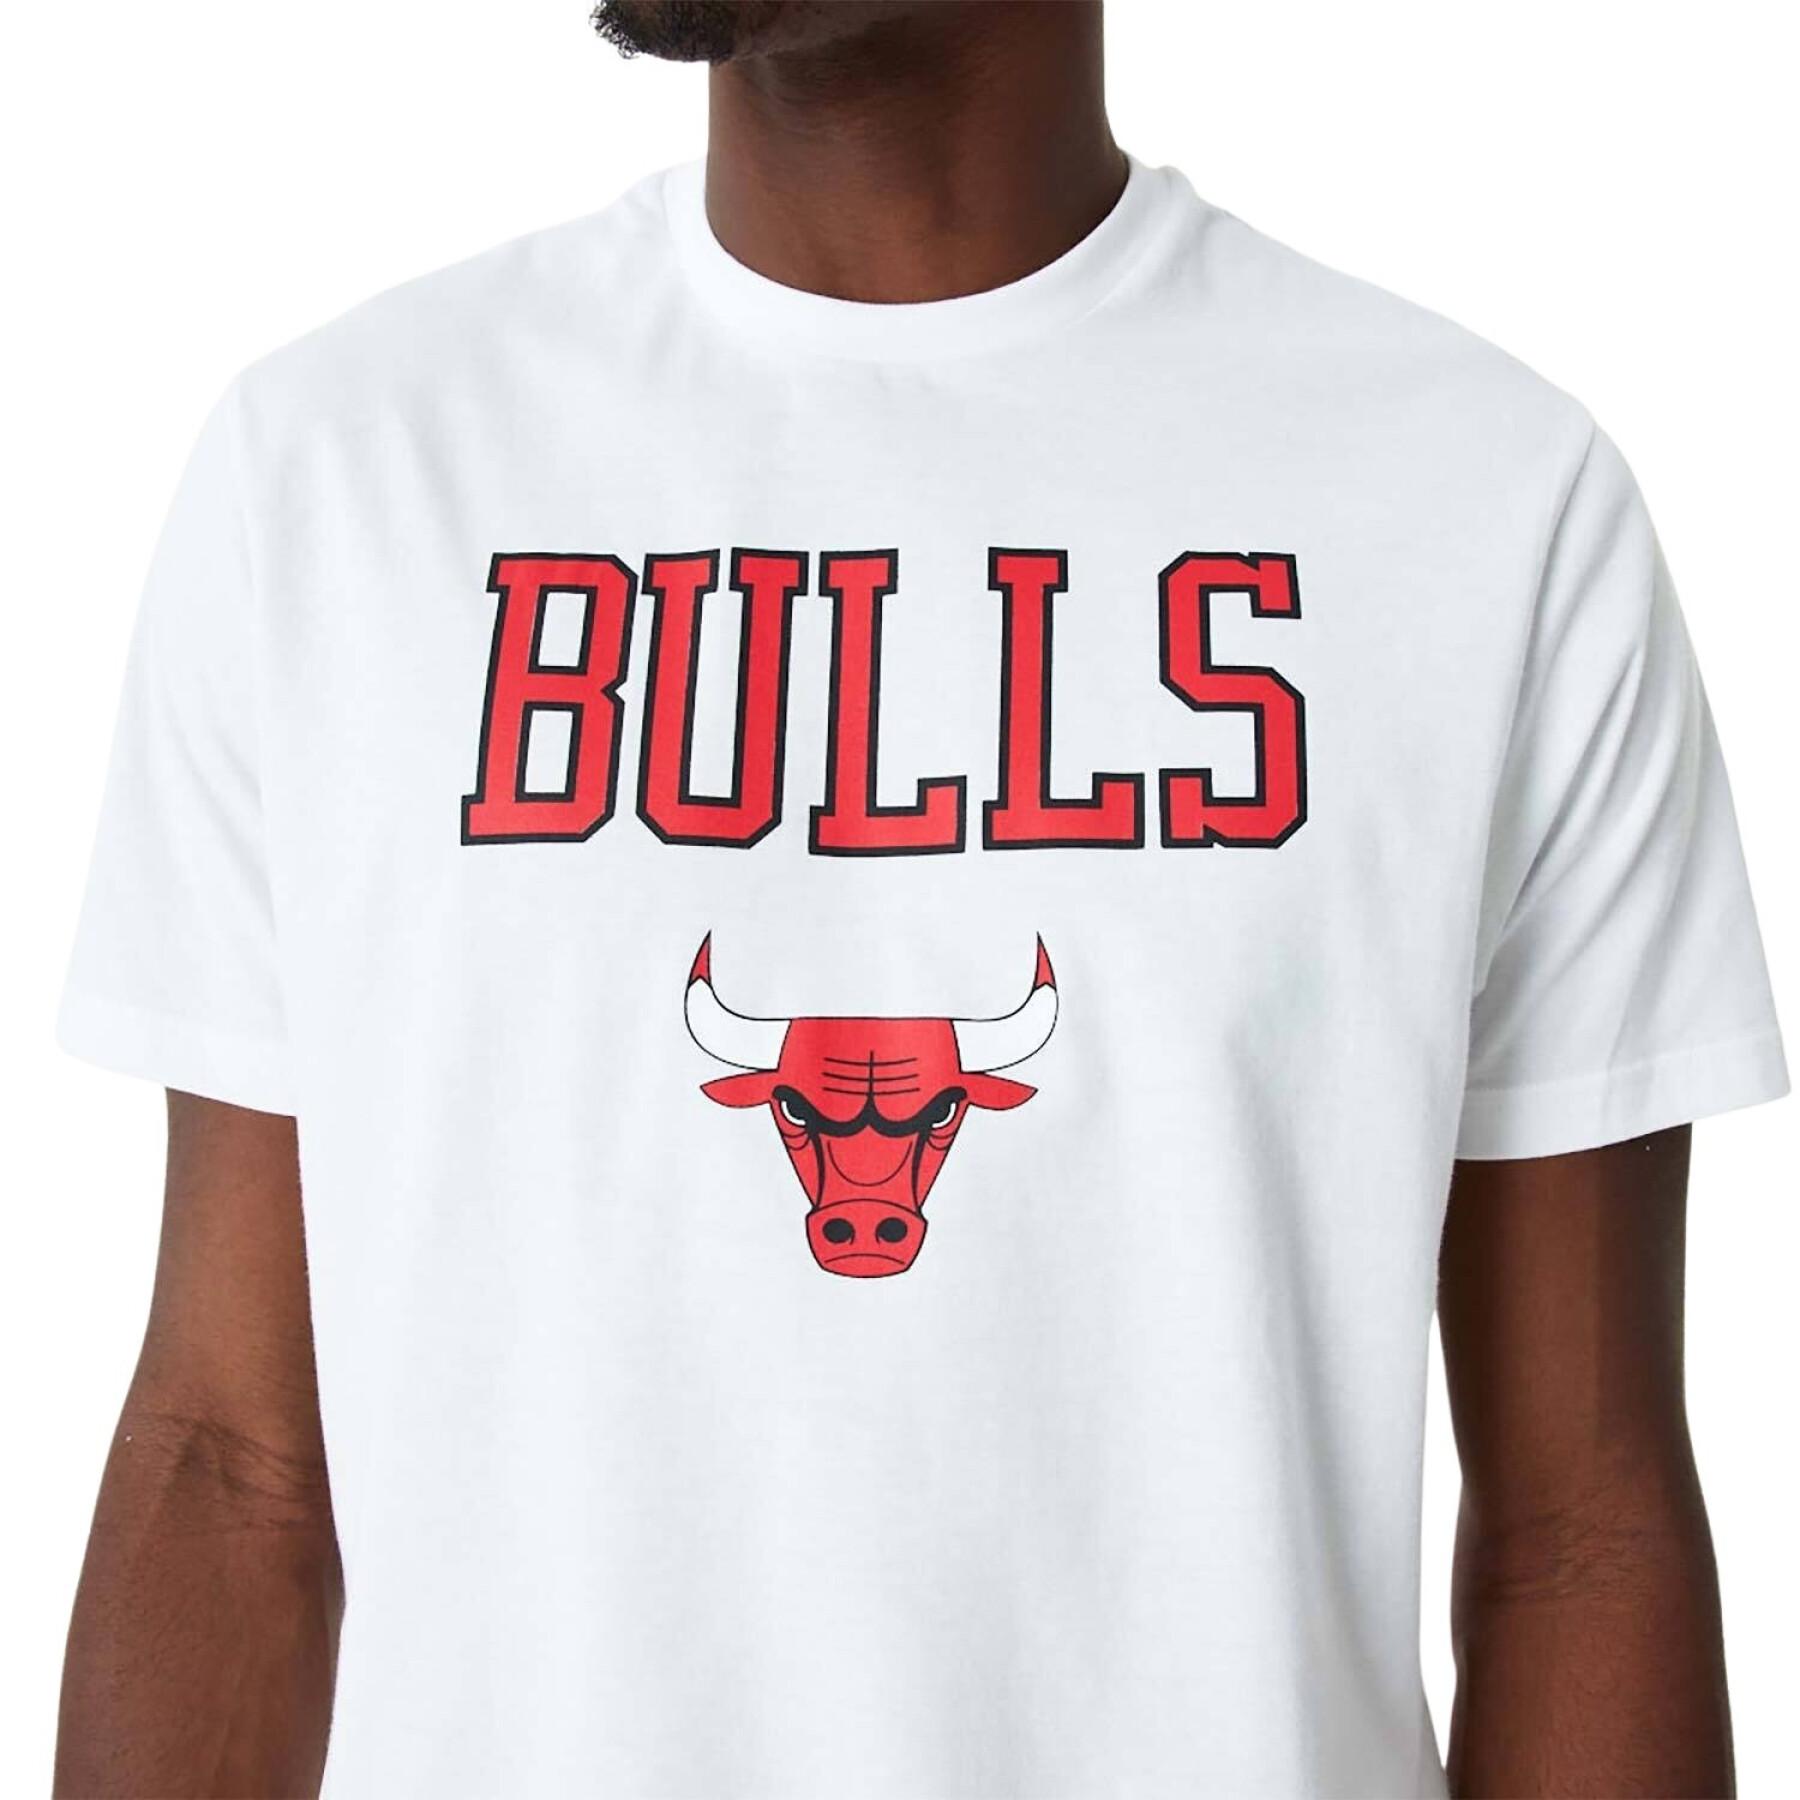 Camiseta mujergo Bulls Team Logo